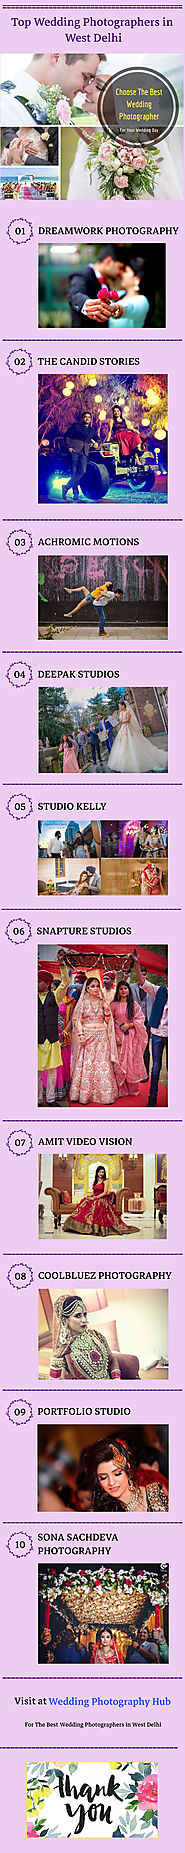 Top Wedding Photographers in West Delhi | Infographic